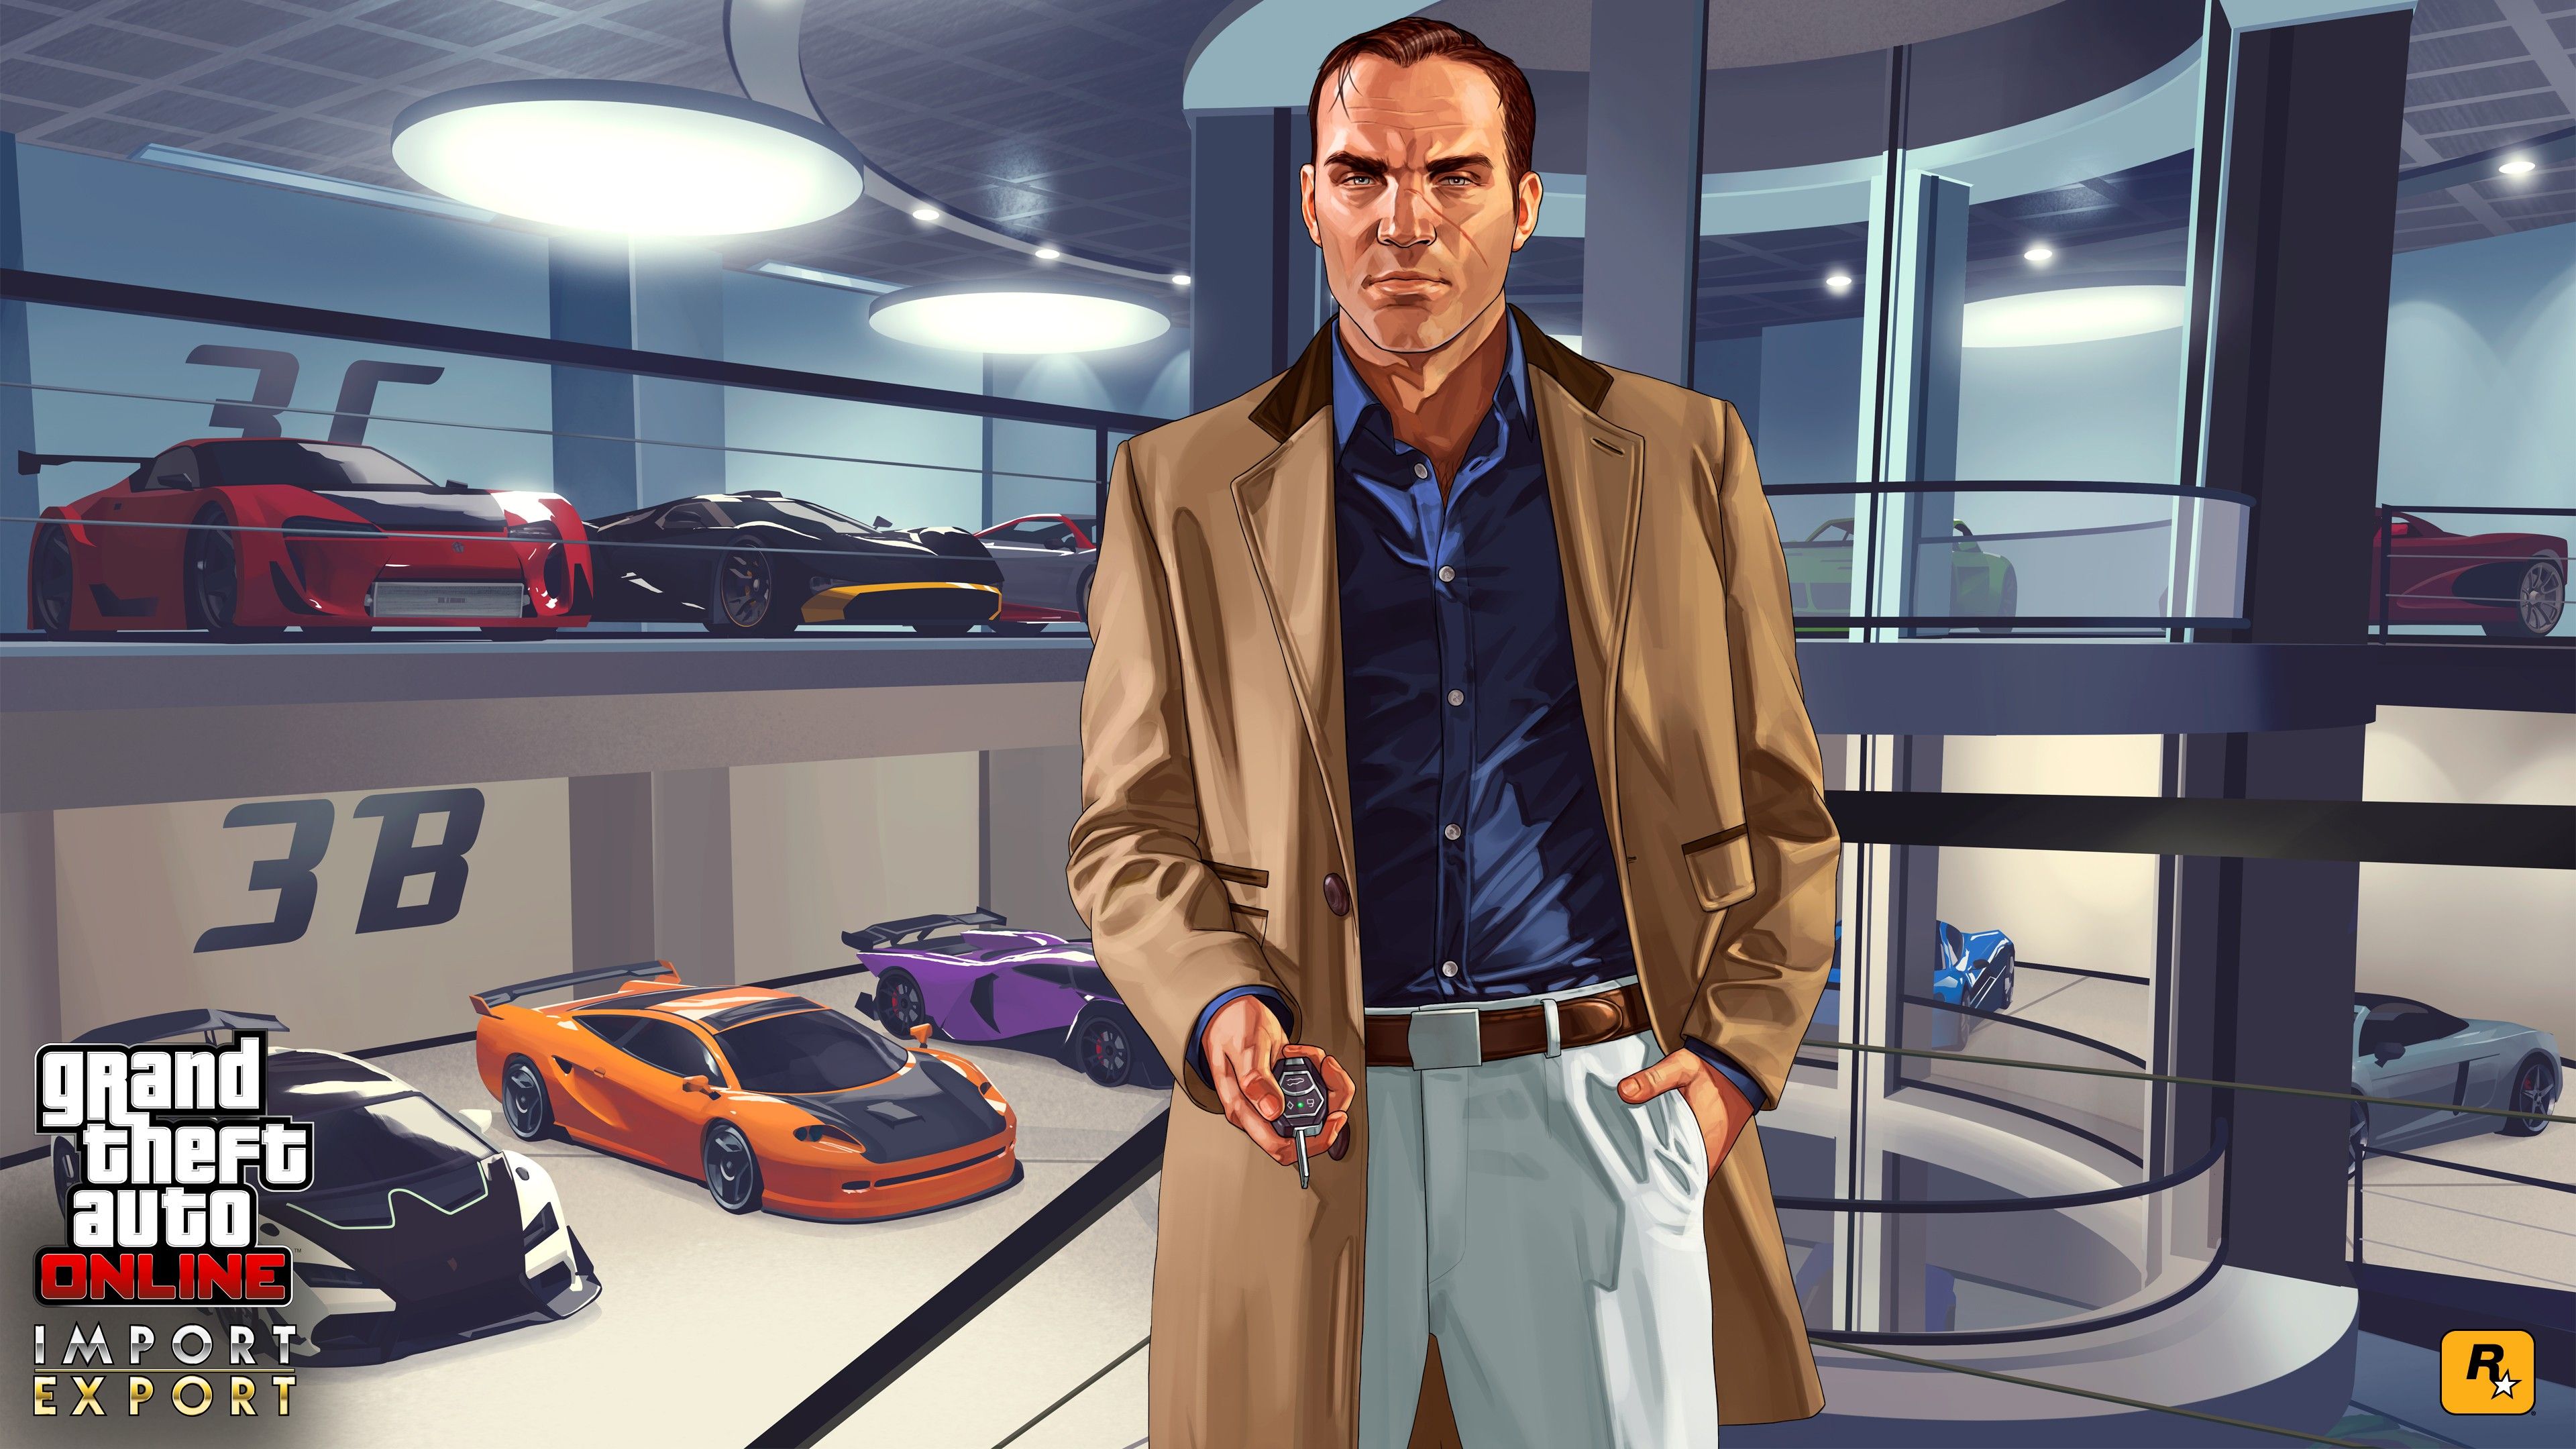 Wallpaper, car, vehicle, Grand Theft Auto V, DLC, Grand Theft Auto Online, Rockstar Games, garages, clothing, screenshot 3840x2160